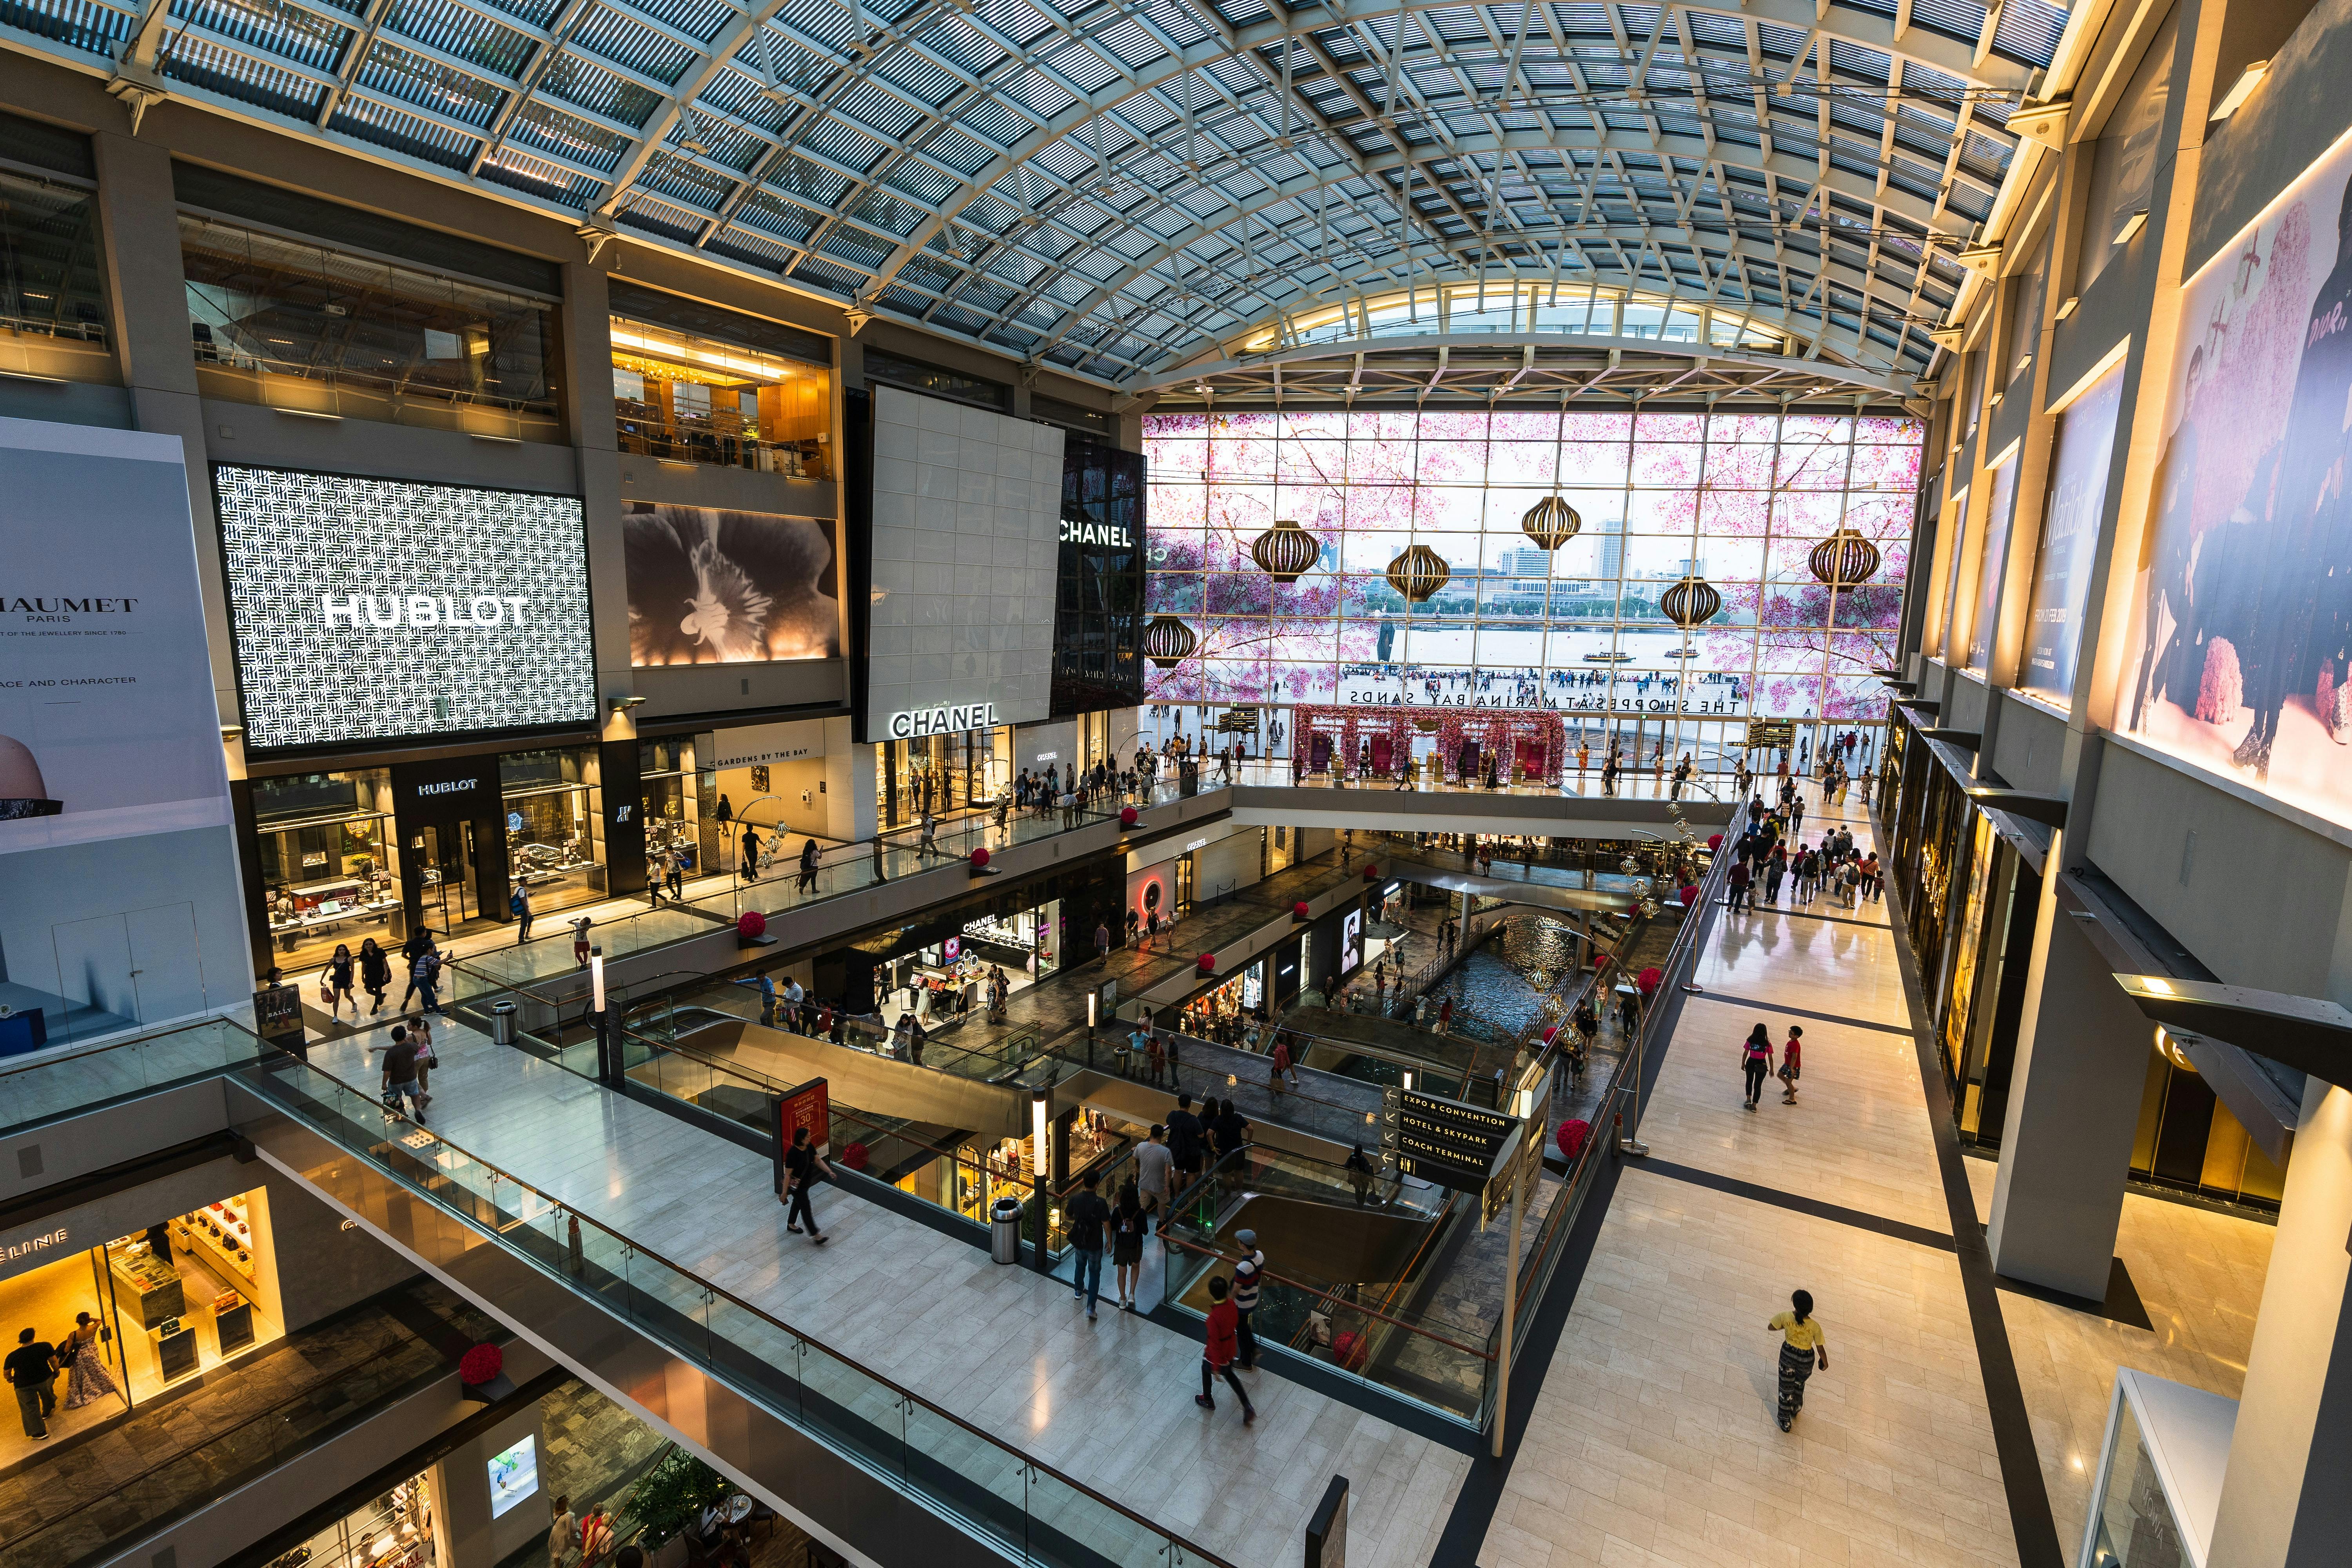 Louis Vuitton Singapore makes splash in airport - Inside Retail Asia